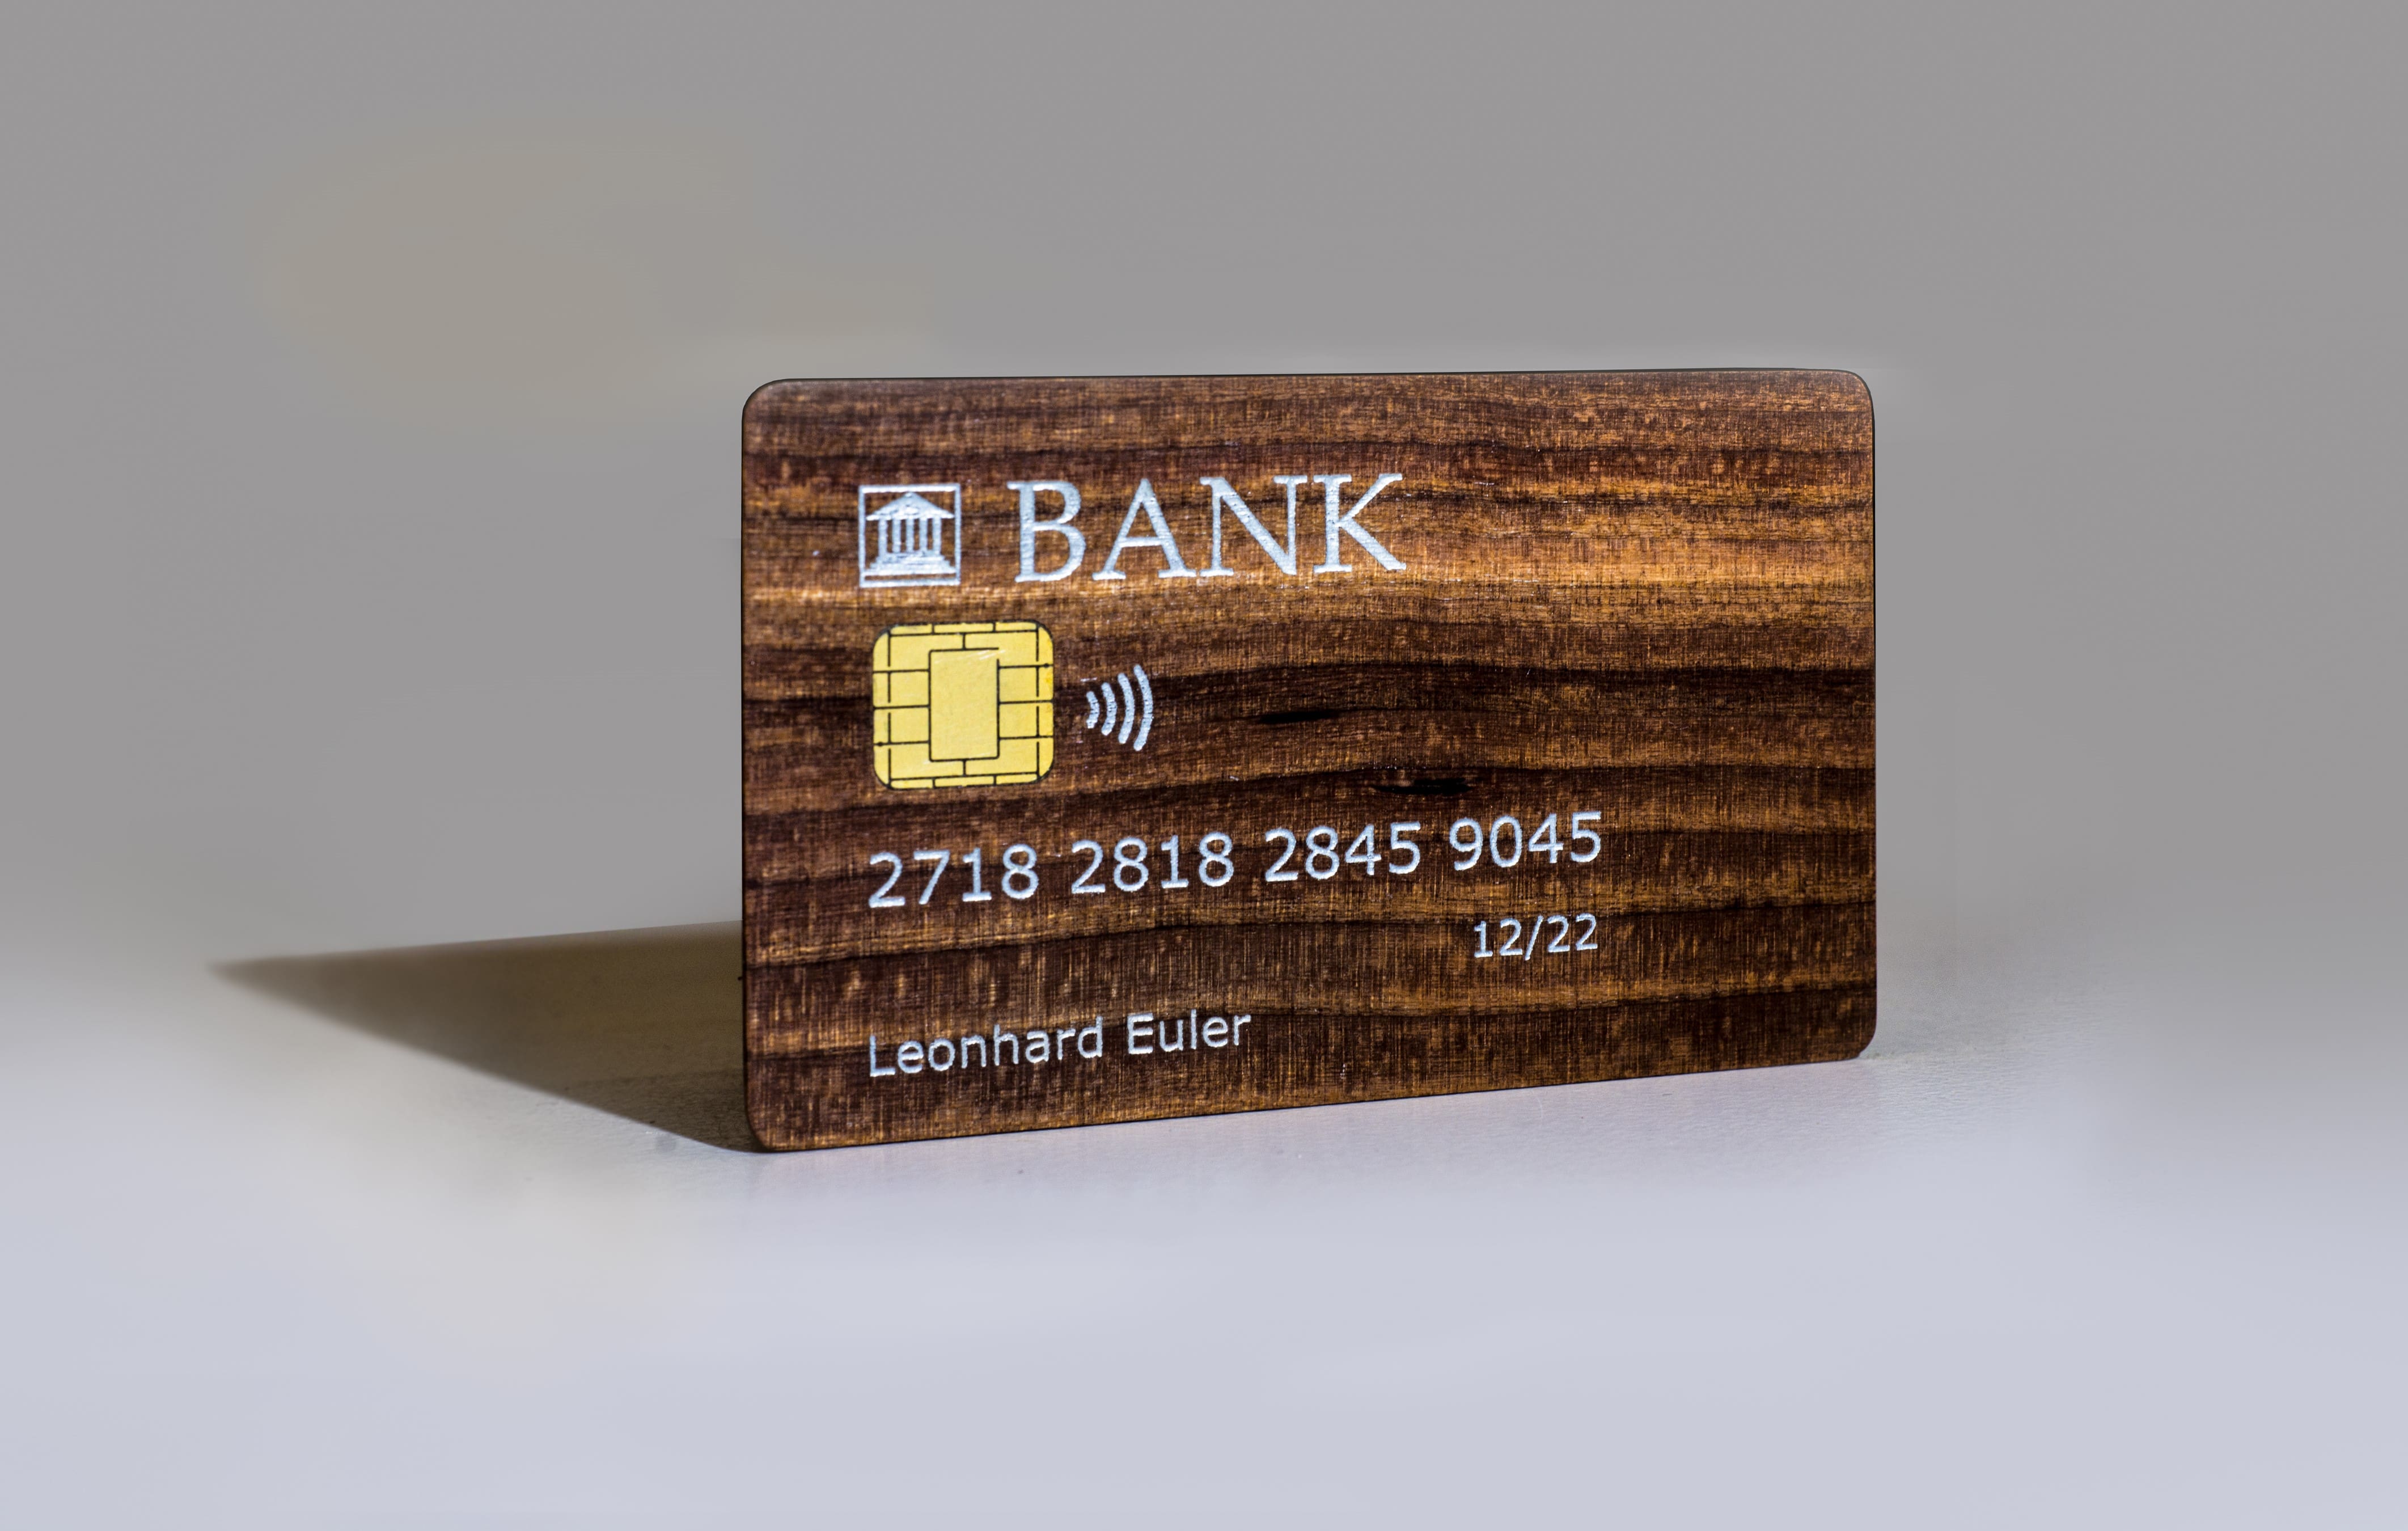  Kontaktlose Kreditkarte aus Kirschenholz